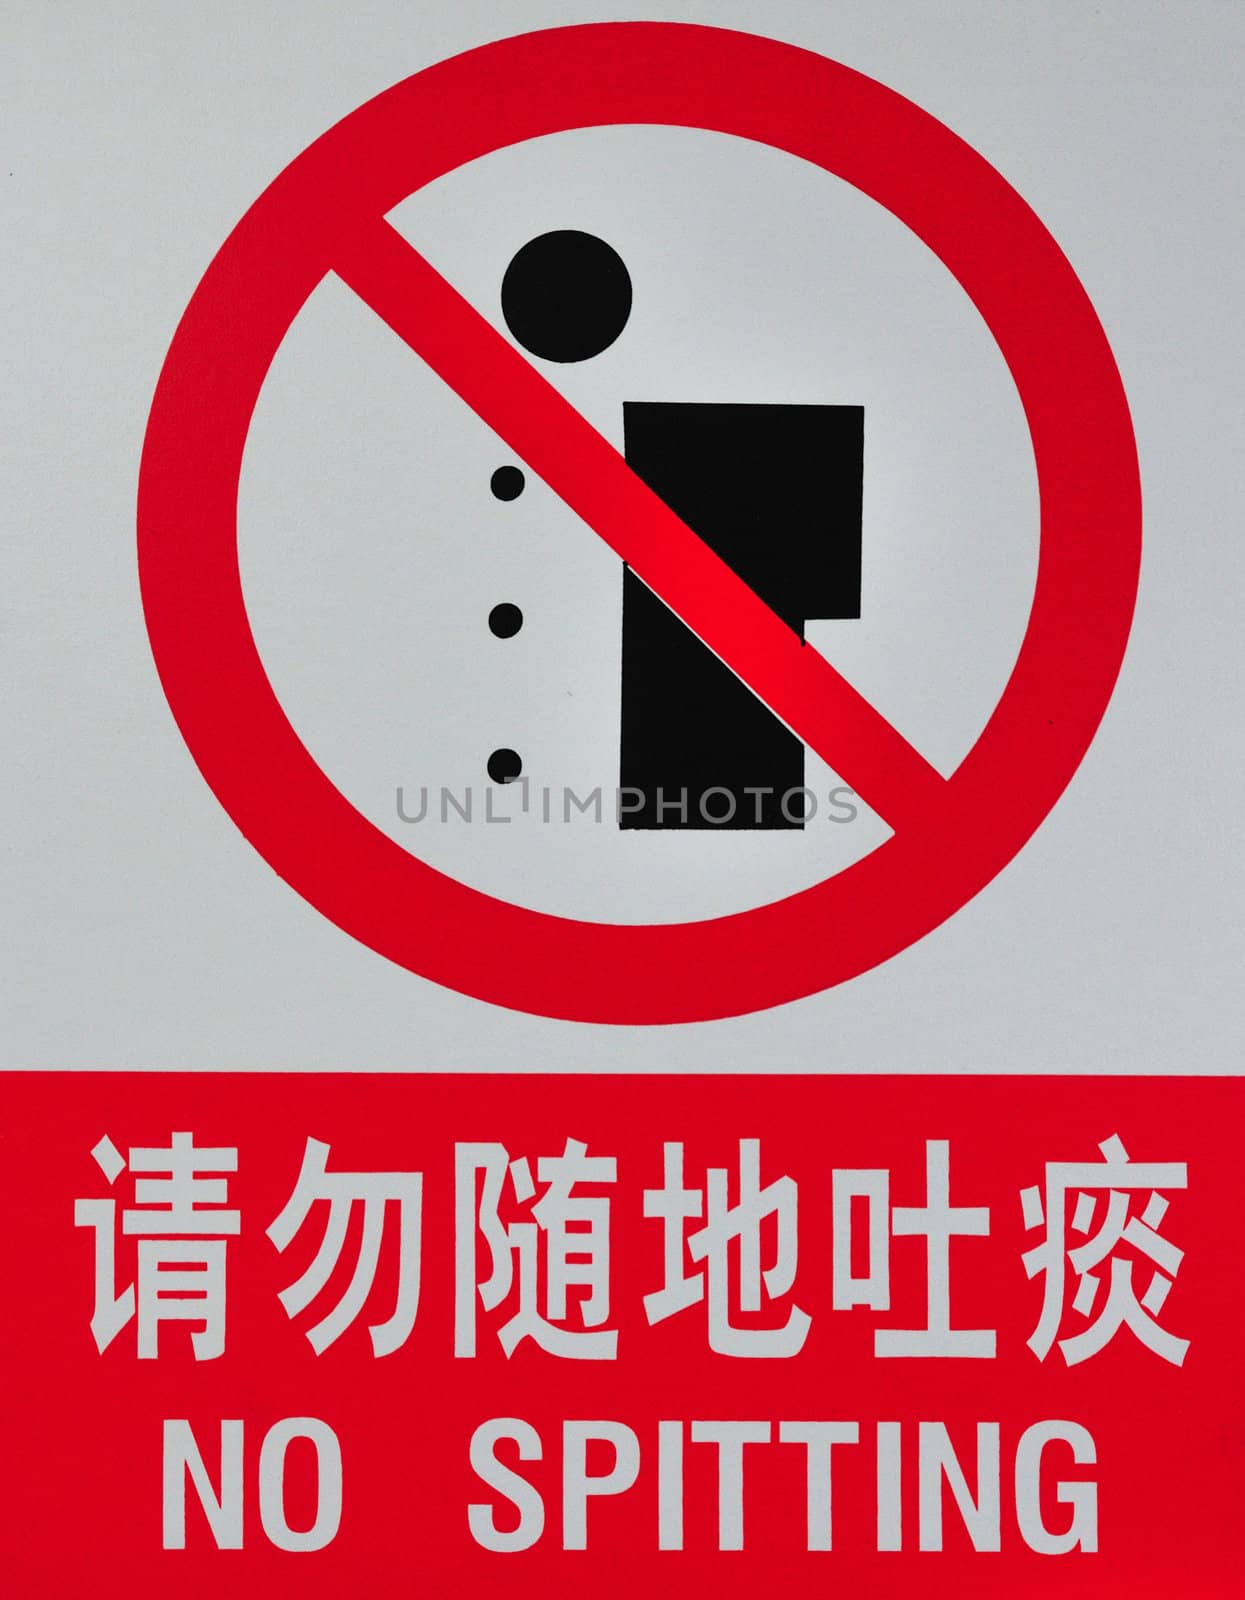 Chinese warning sign "no spitting"